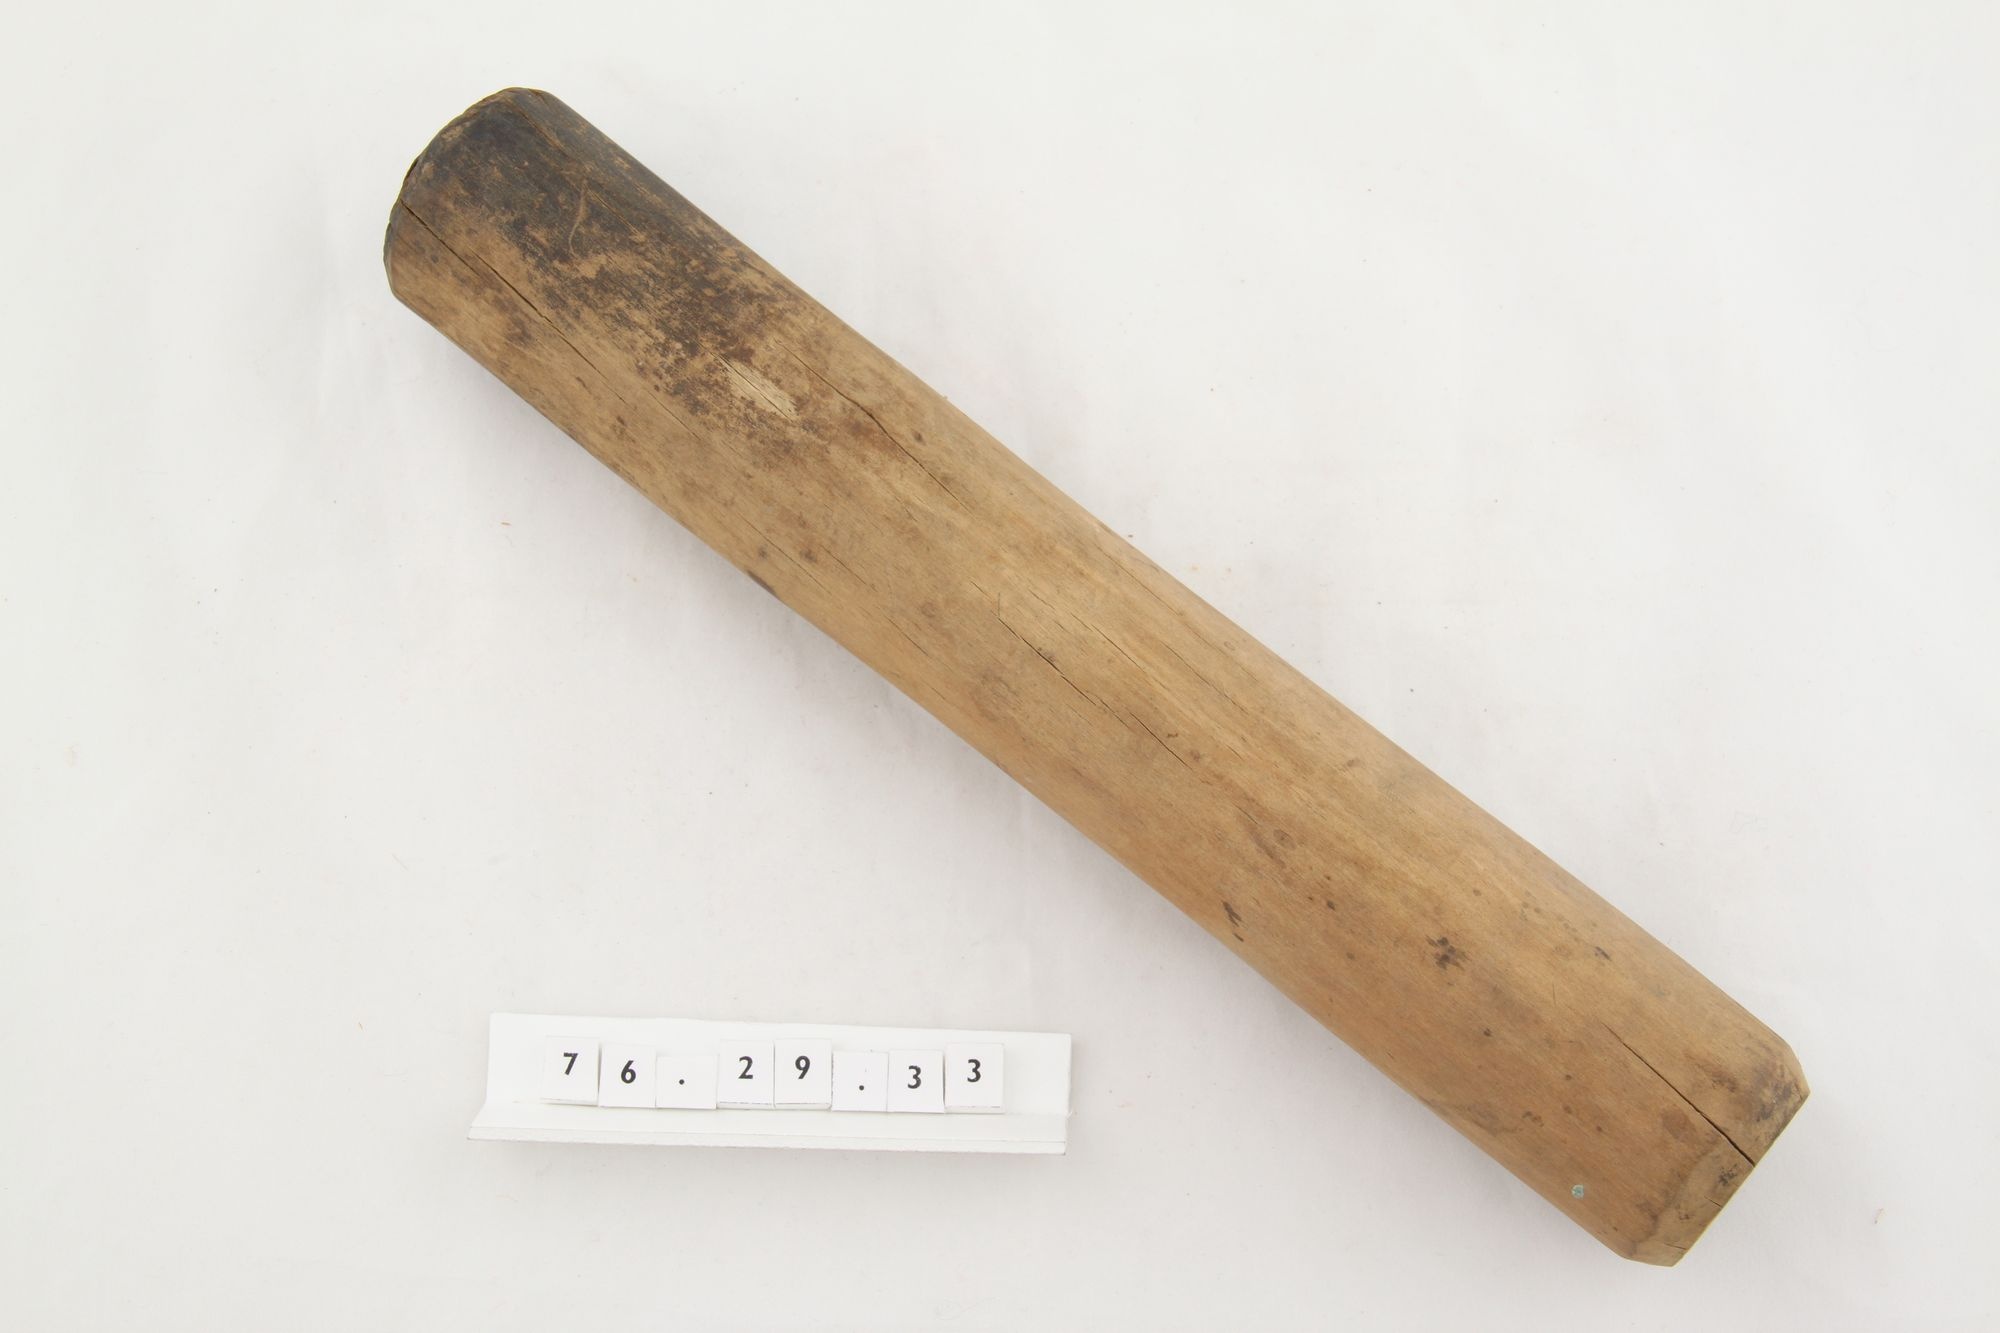 Vízipuska "kócpuska" (Rippl-Rónai Múzeum CC BY-NC-SA)